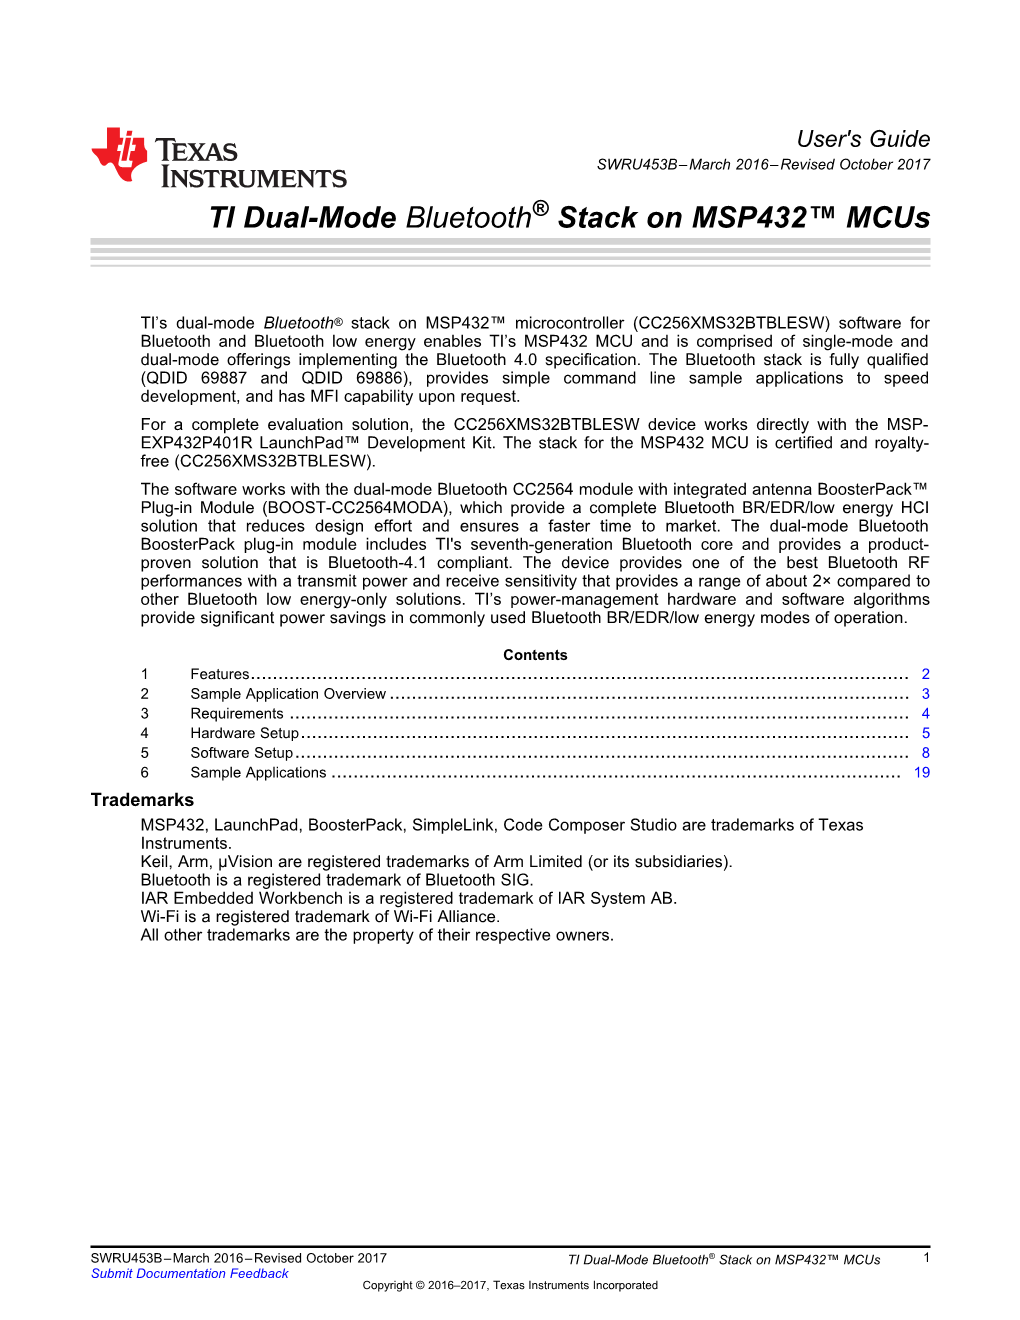 TI Dual-Mode Bluetooth® Stack on MSP432 Mcus User Guide (Rev. B)